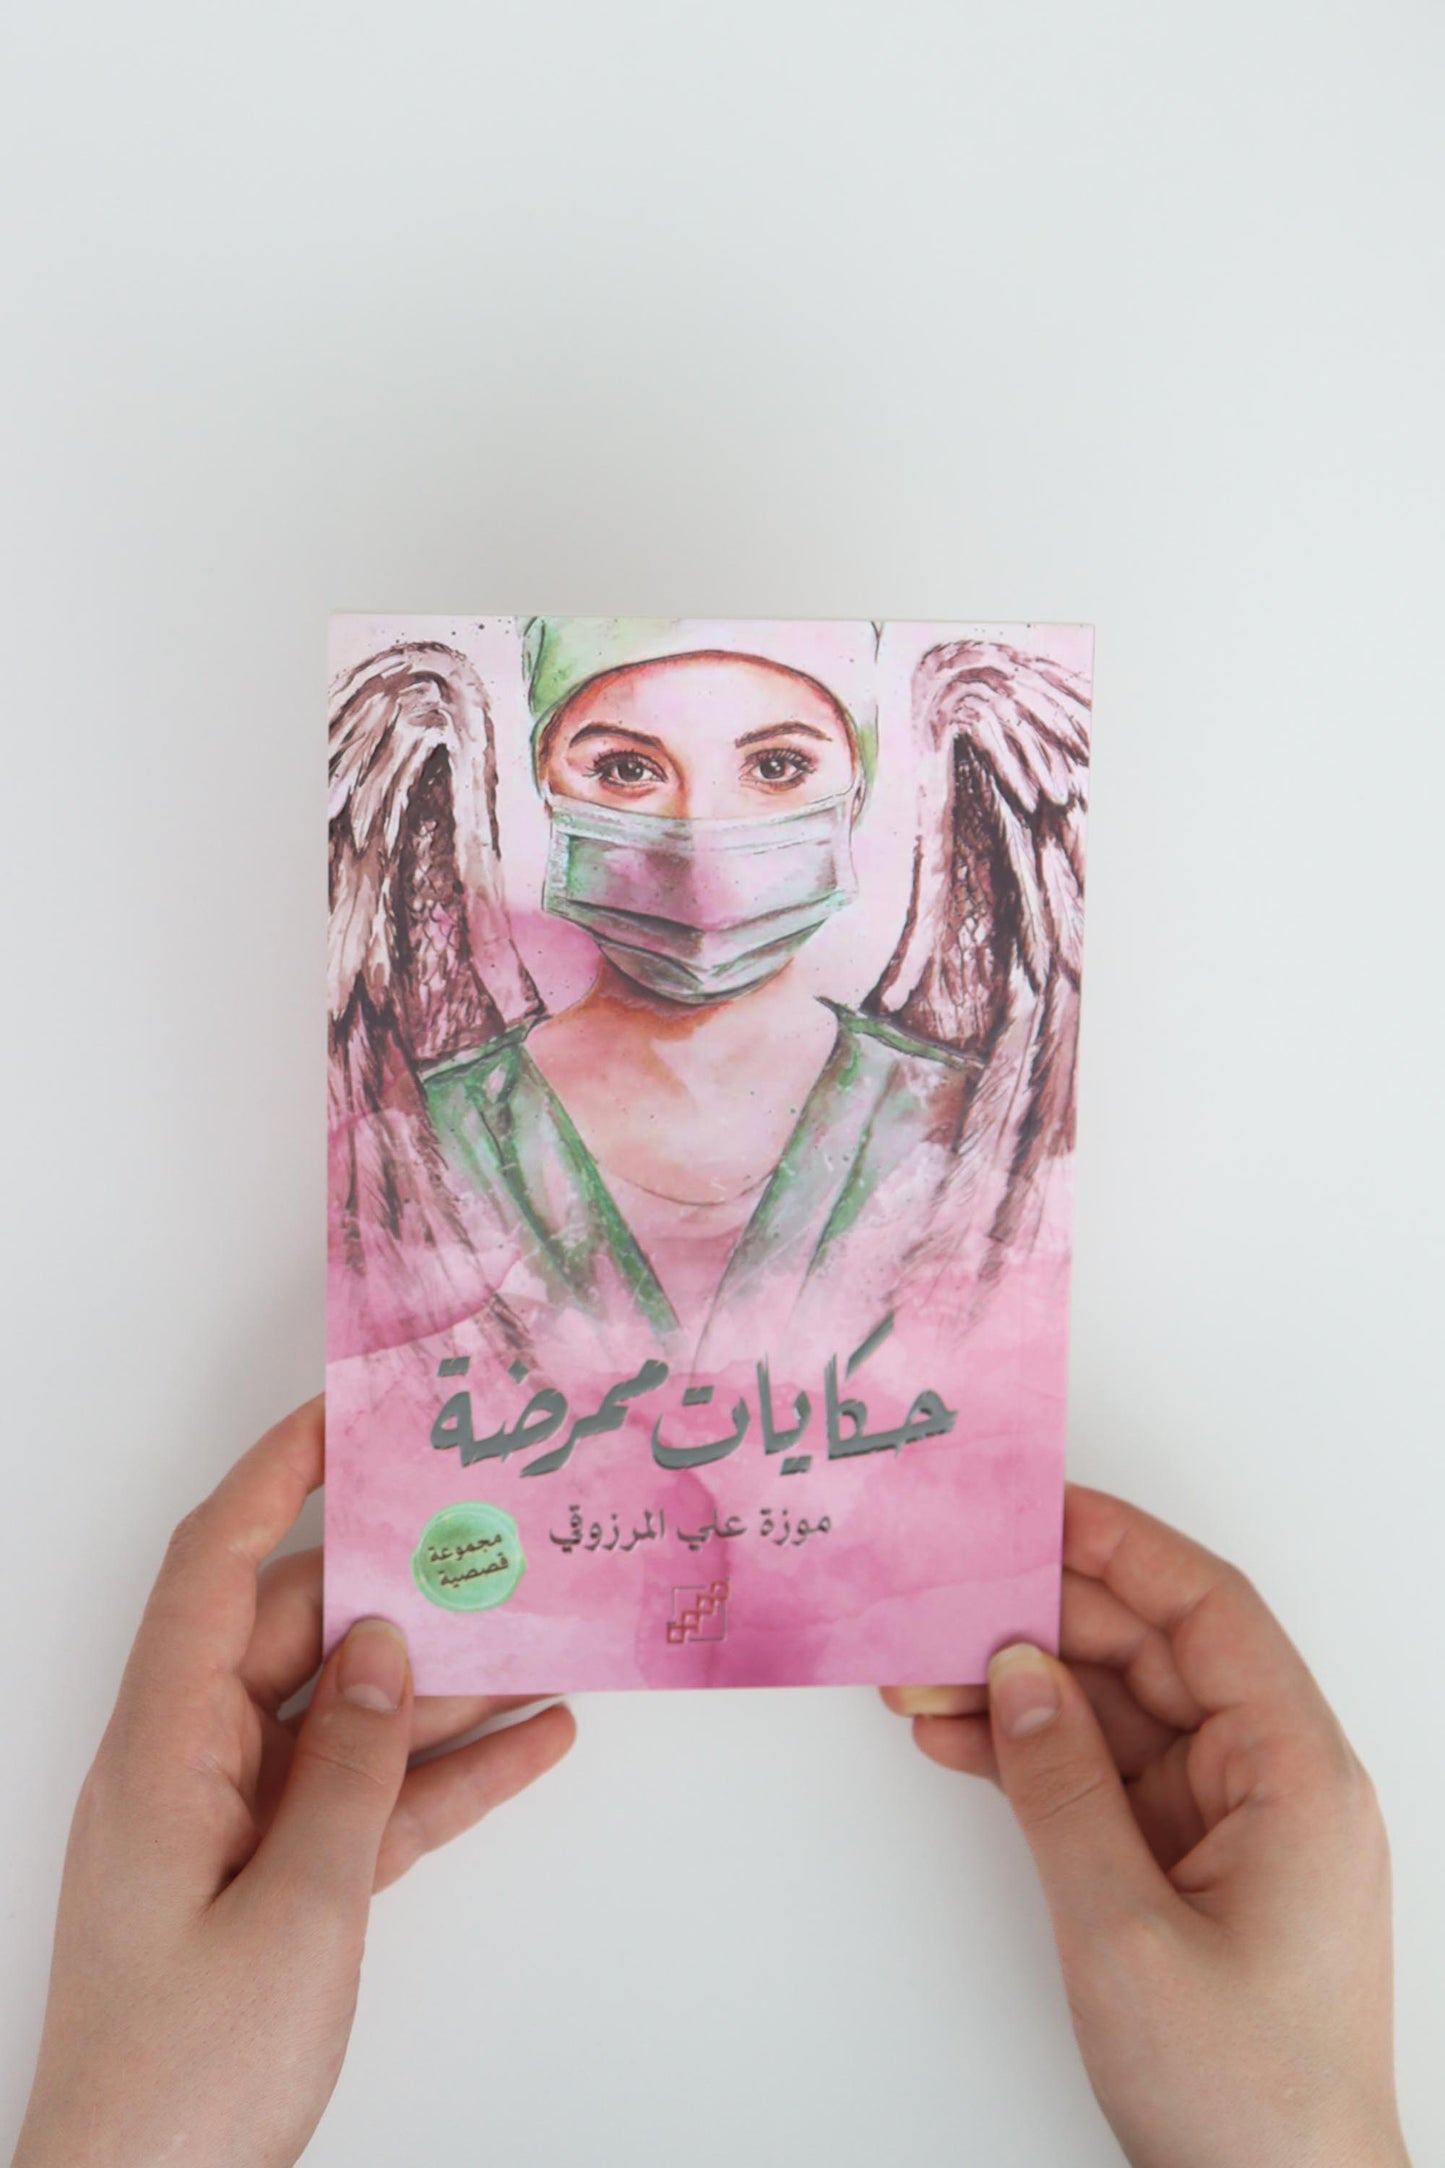 Nurse Tales by Moza Almarzooqi